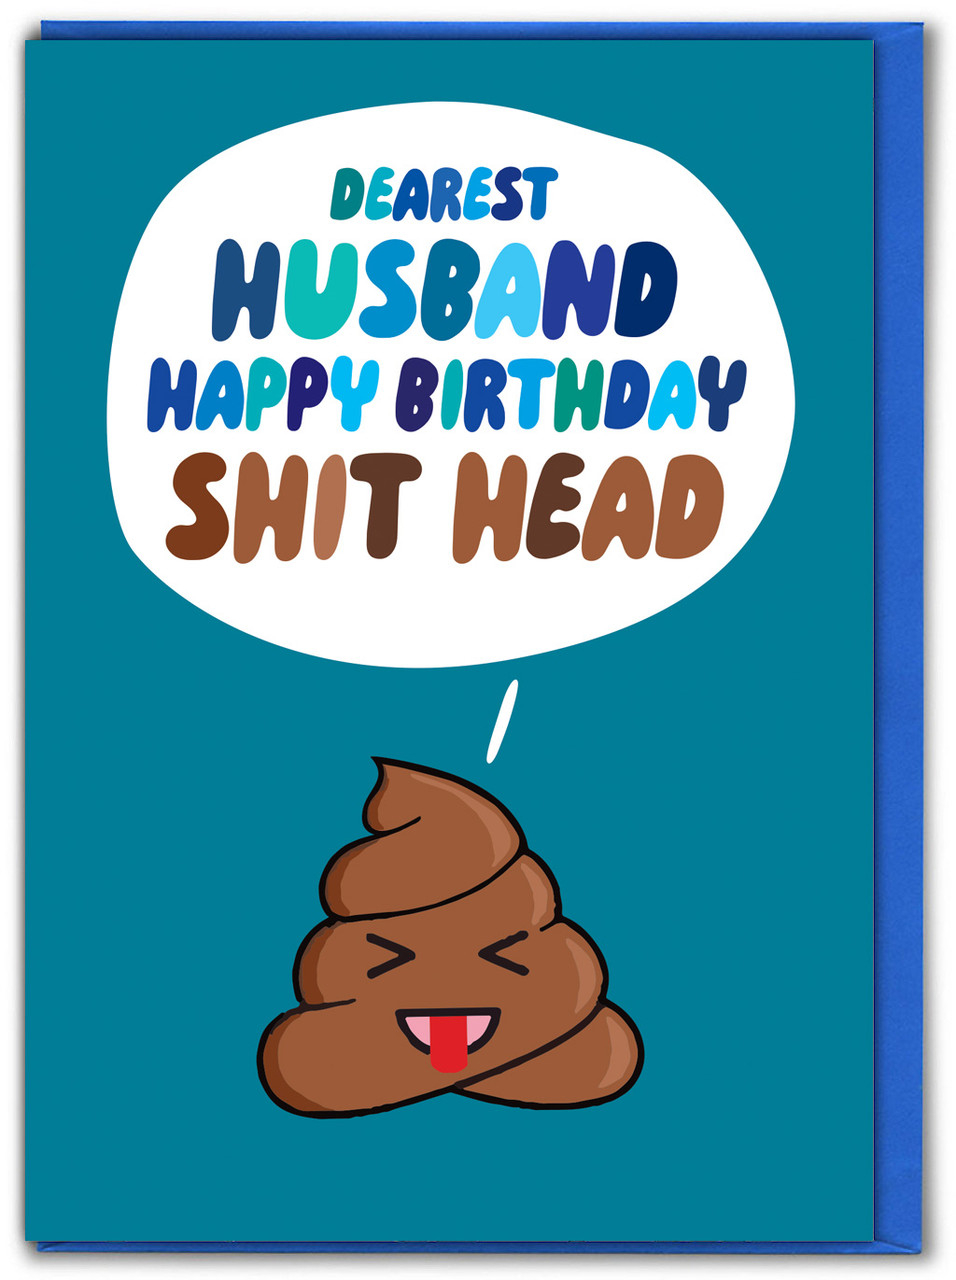 Rude Husband Birthday Card - Shit Head By Brainbox Candy 